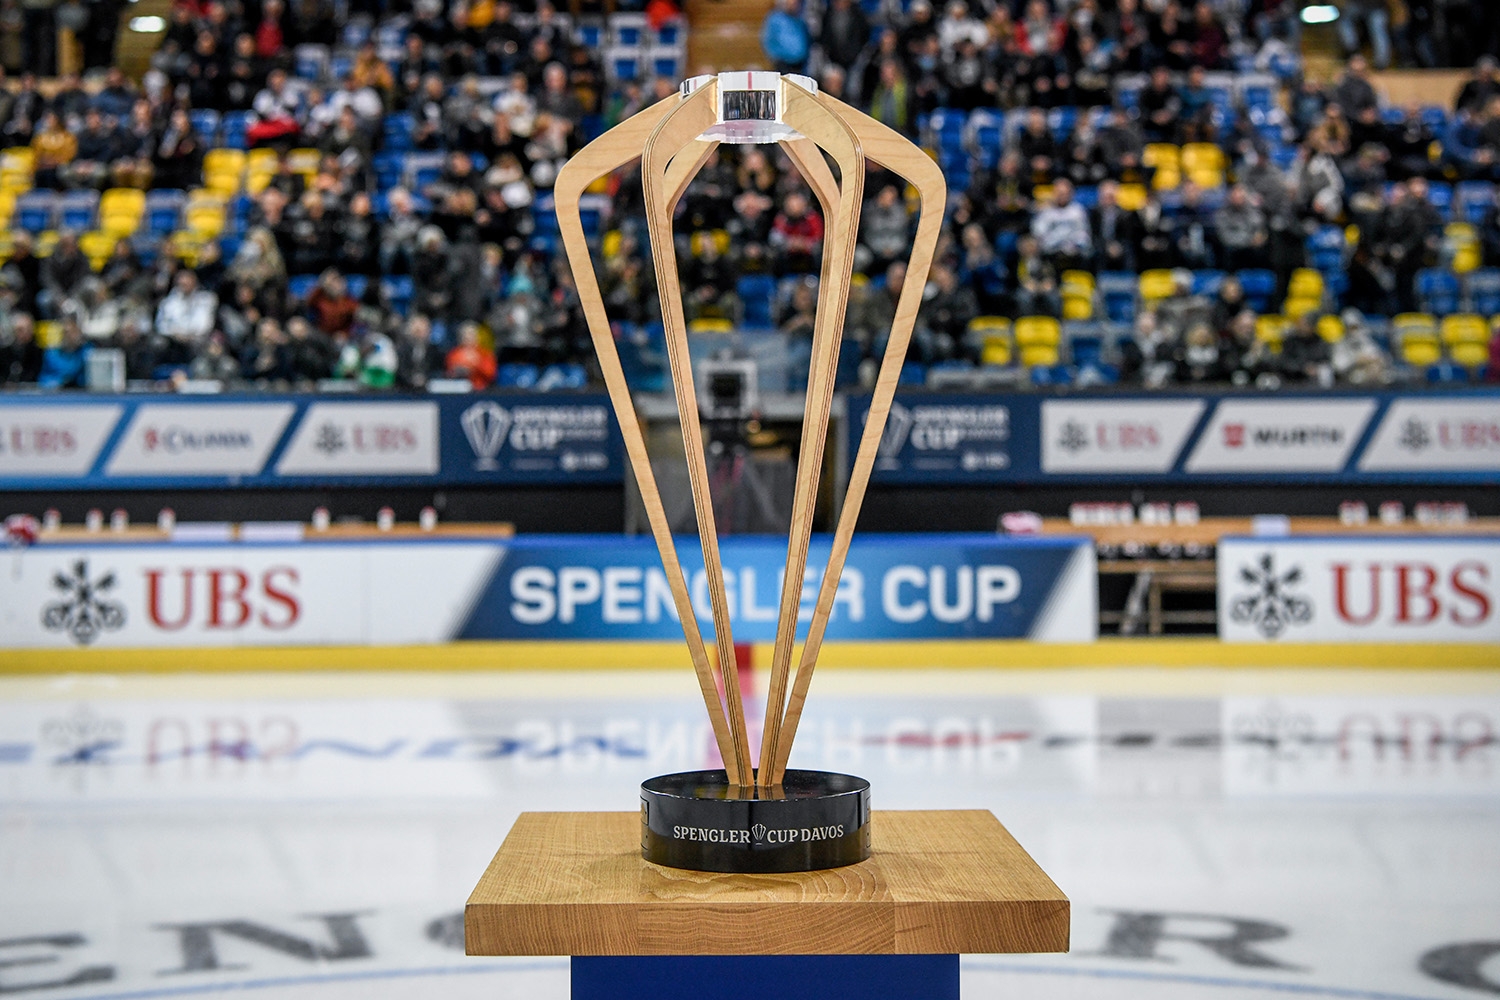 SPENGLER CUP 2020 CANCELLED Spengler Cup Davos